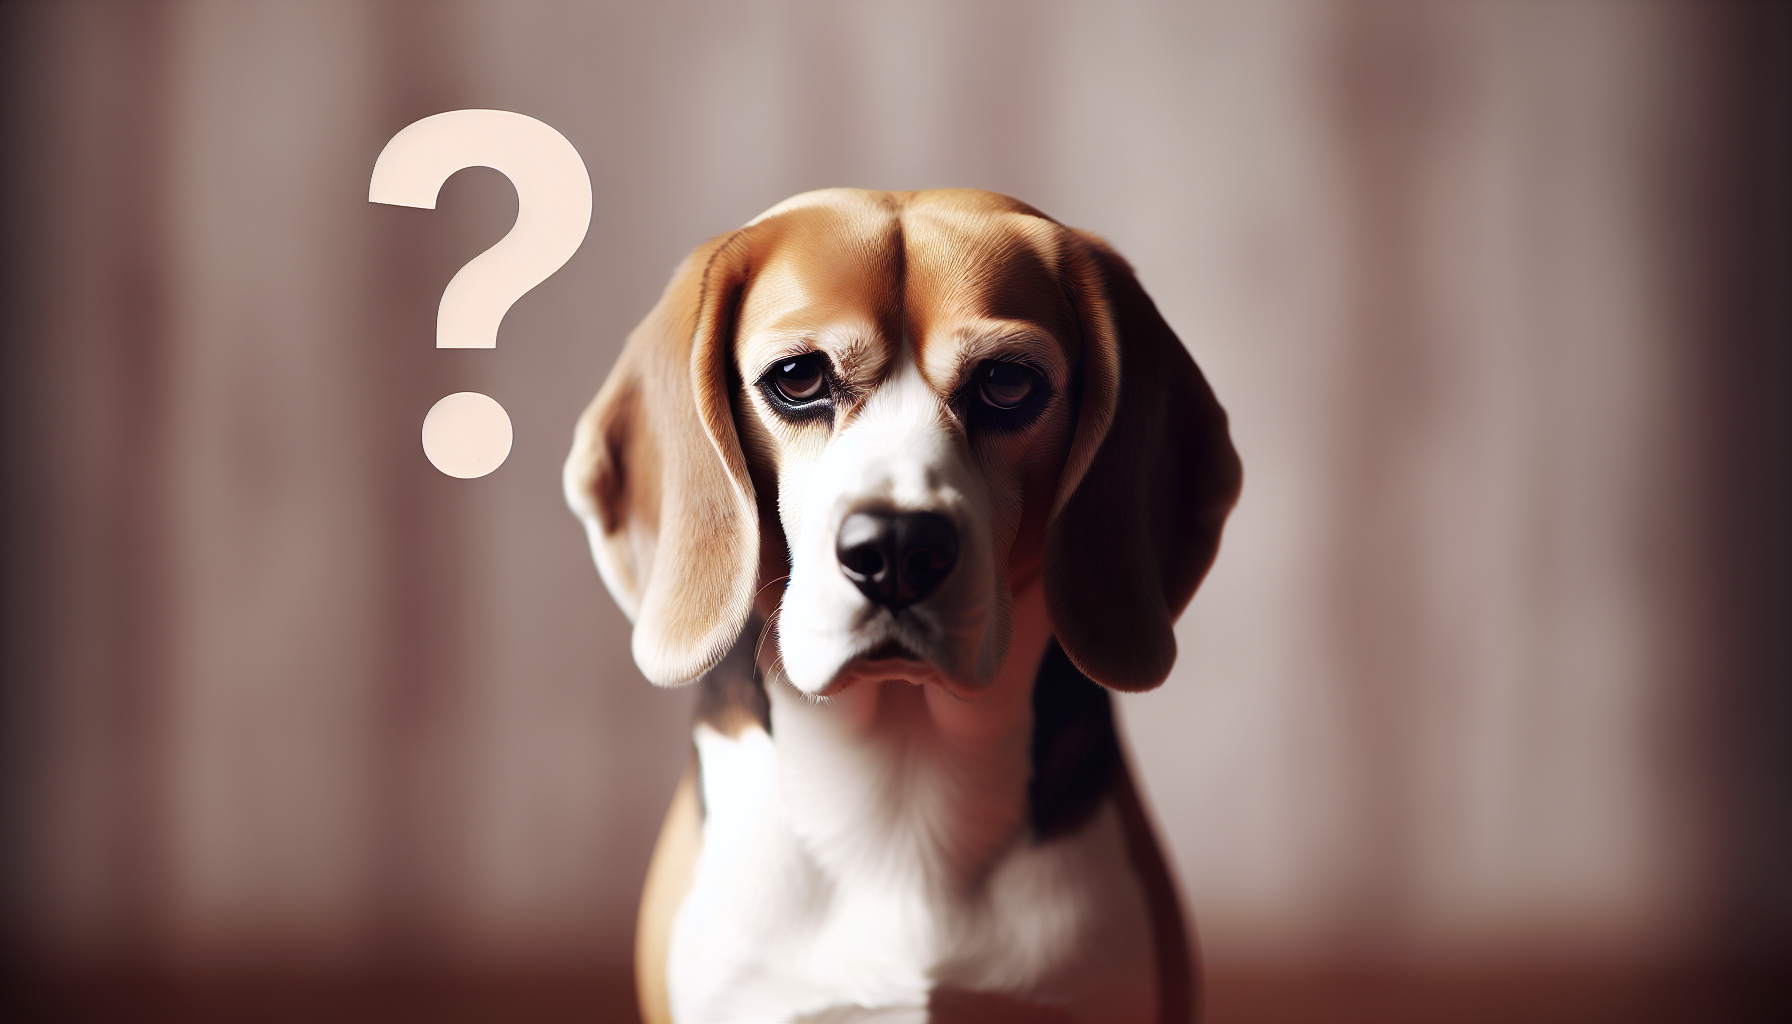 beagle with a sad expression and unsure